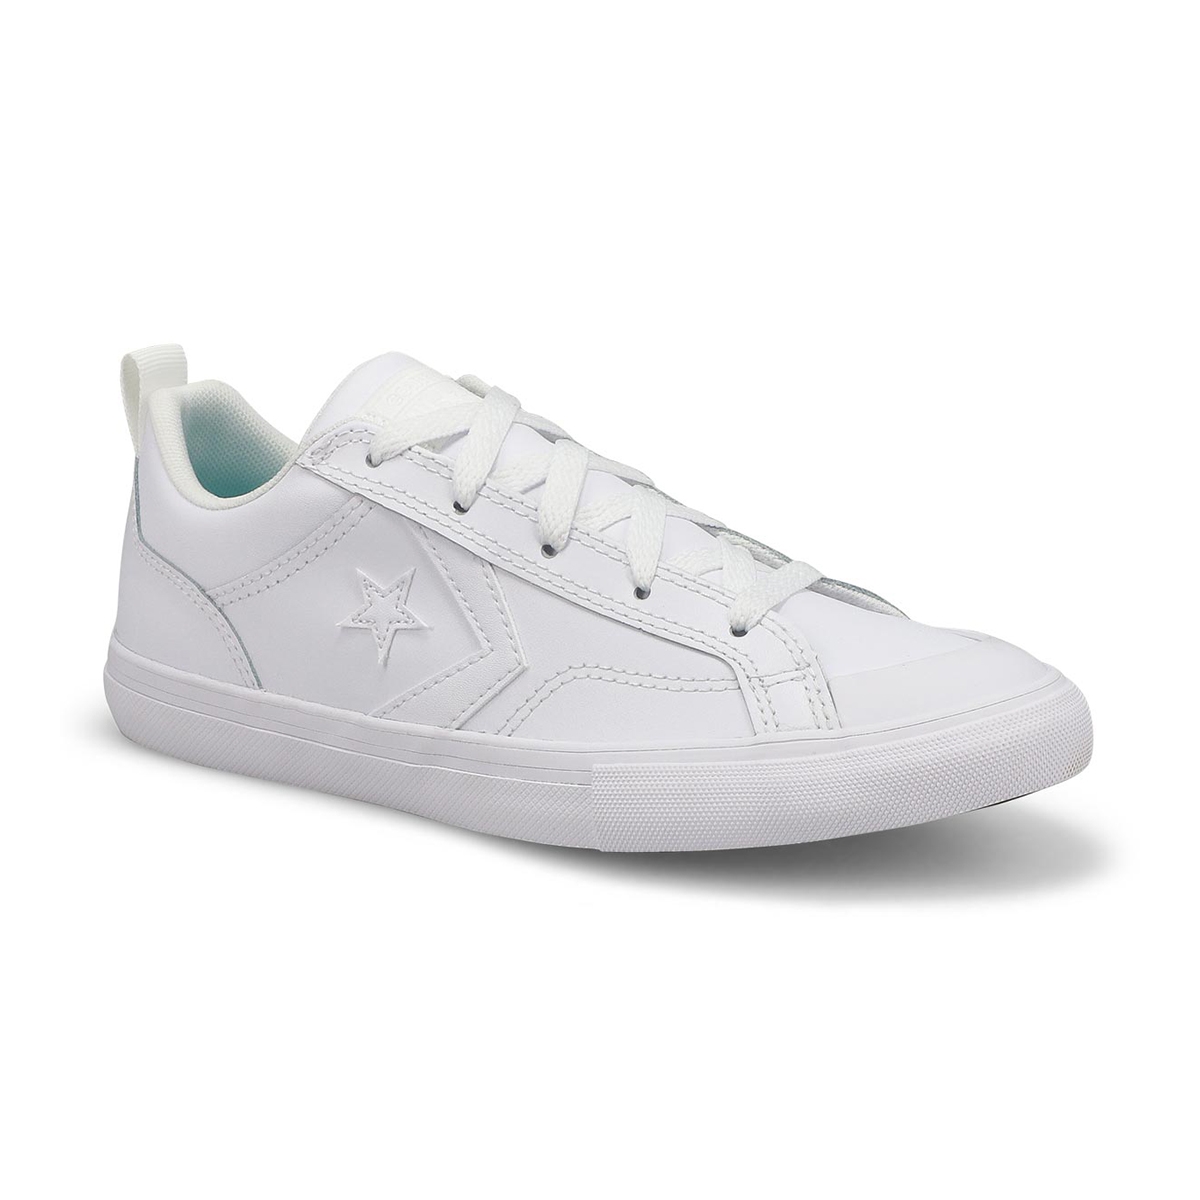 Boy's Pro Blaze Leather Sneaker - White/White